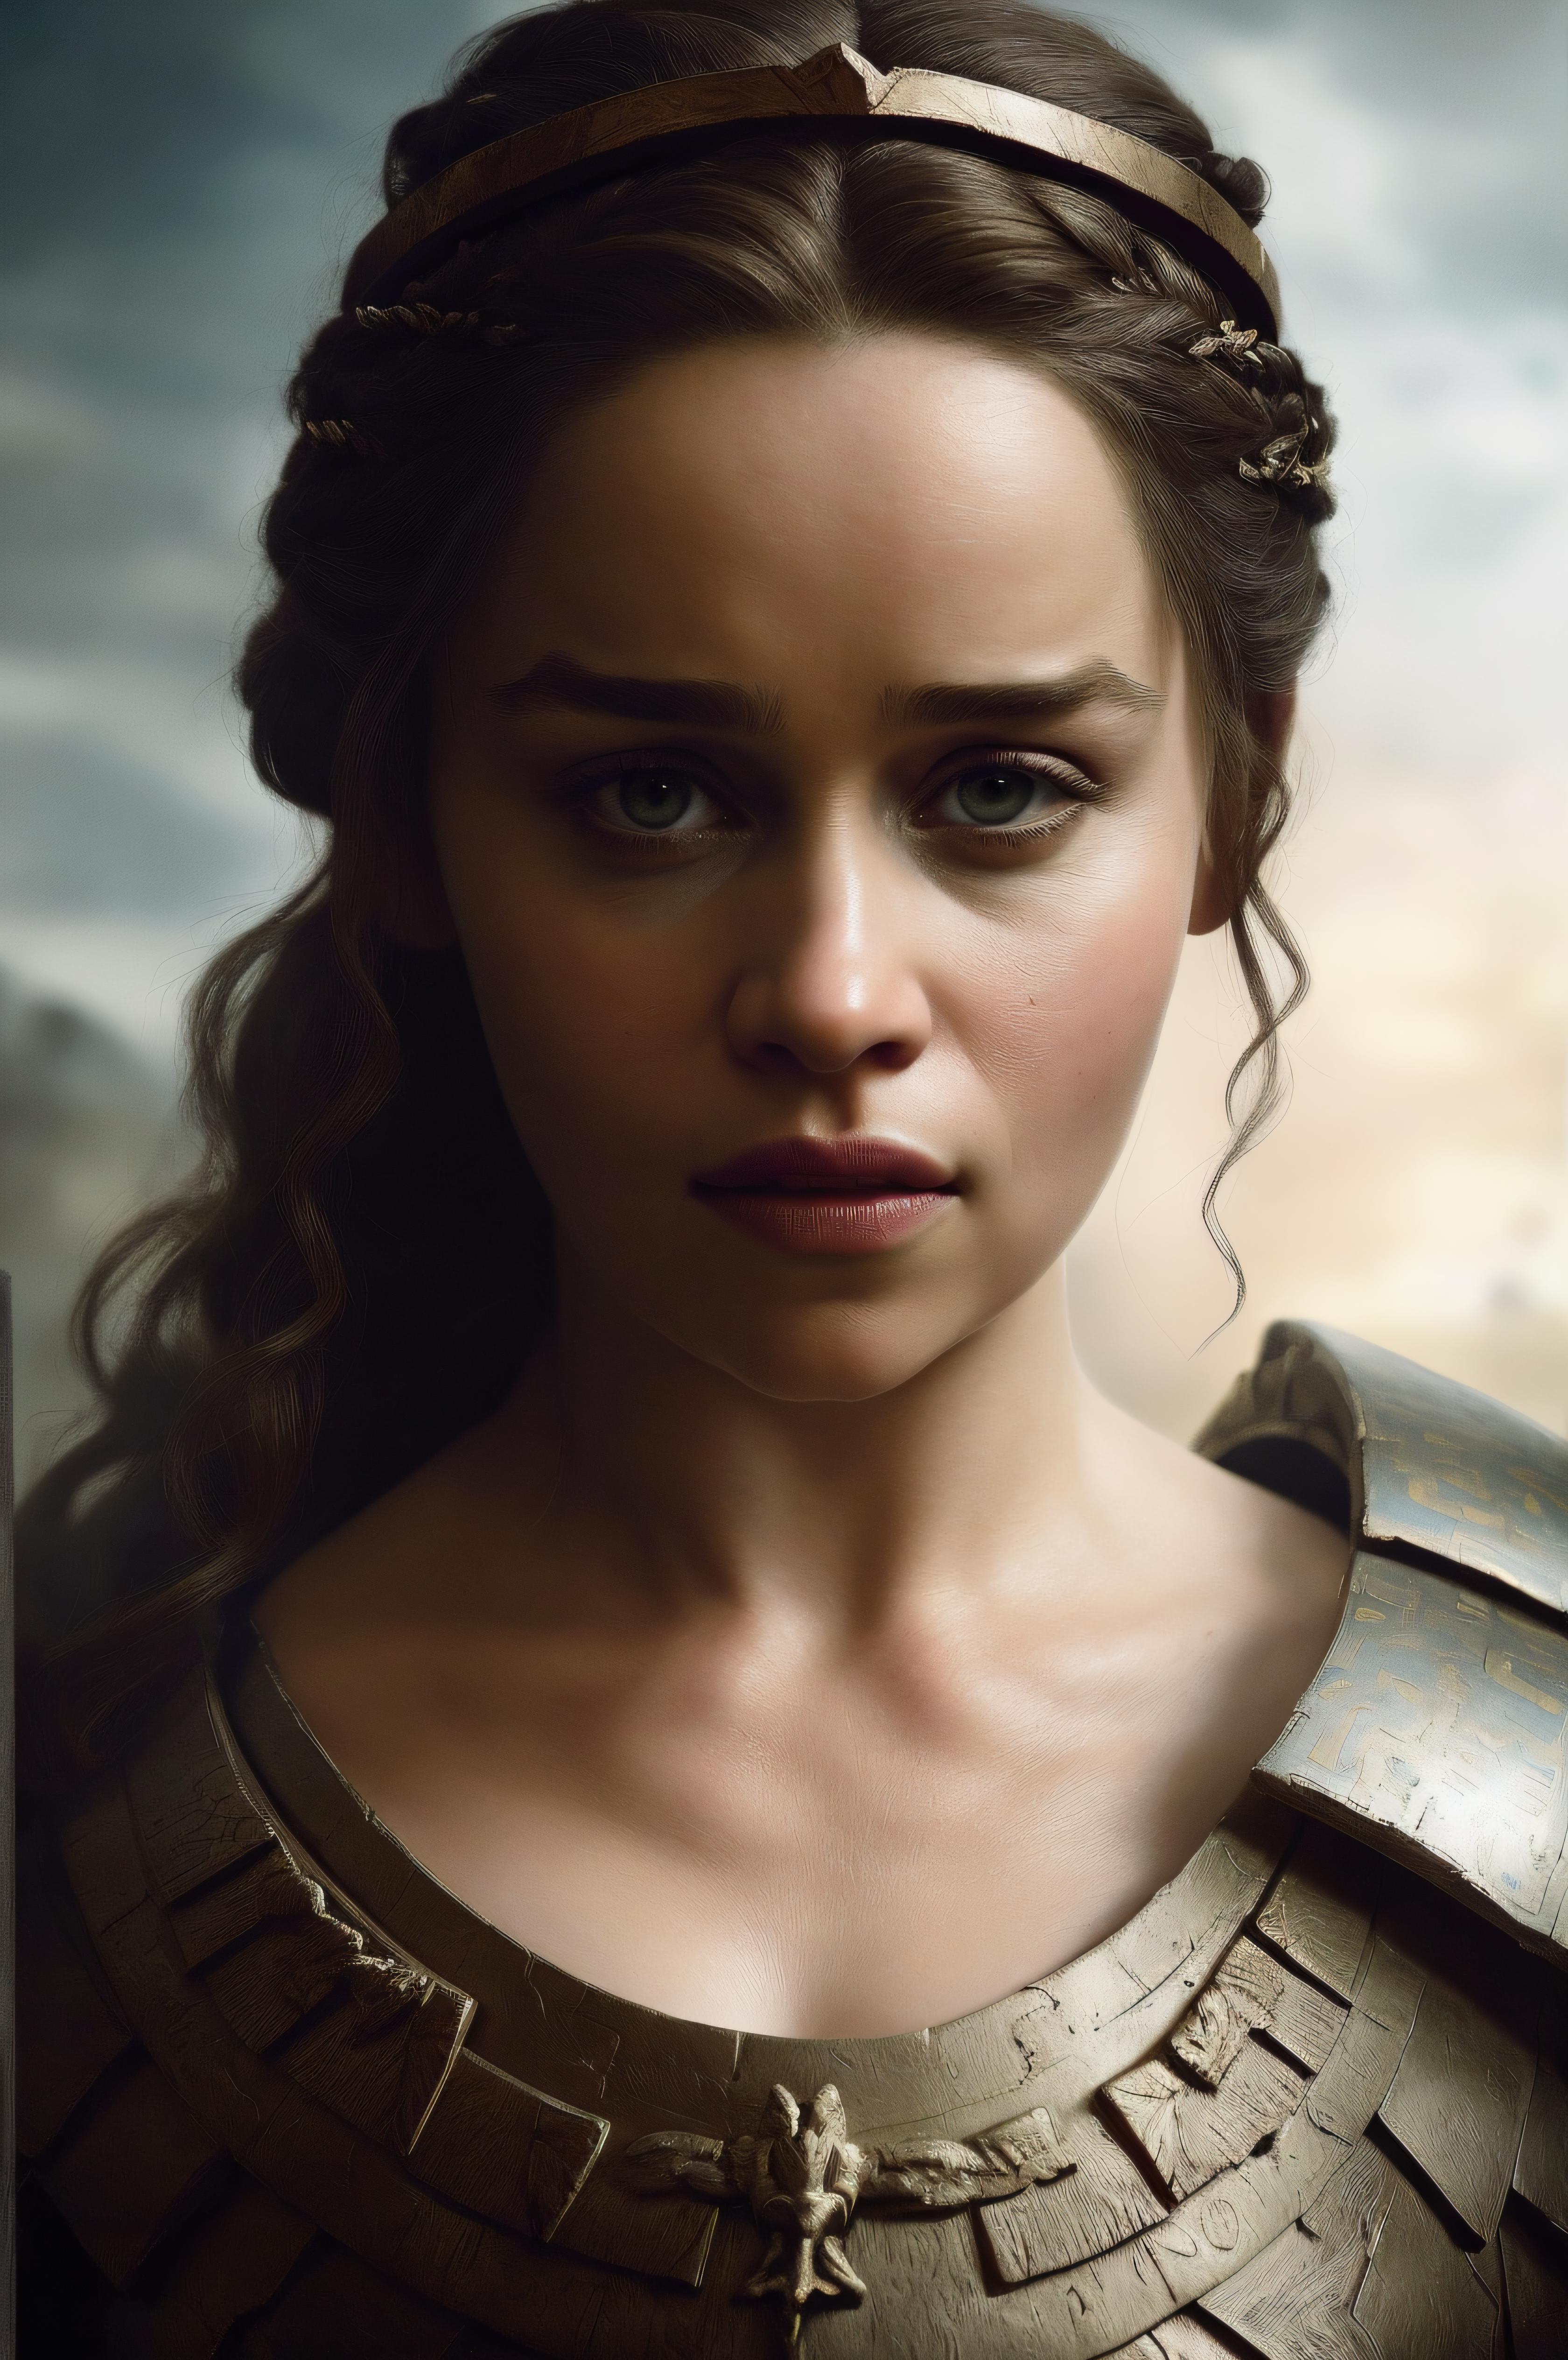 Emilia Clarke image by picassofroggo